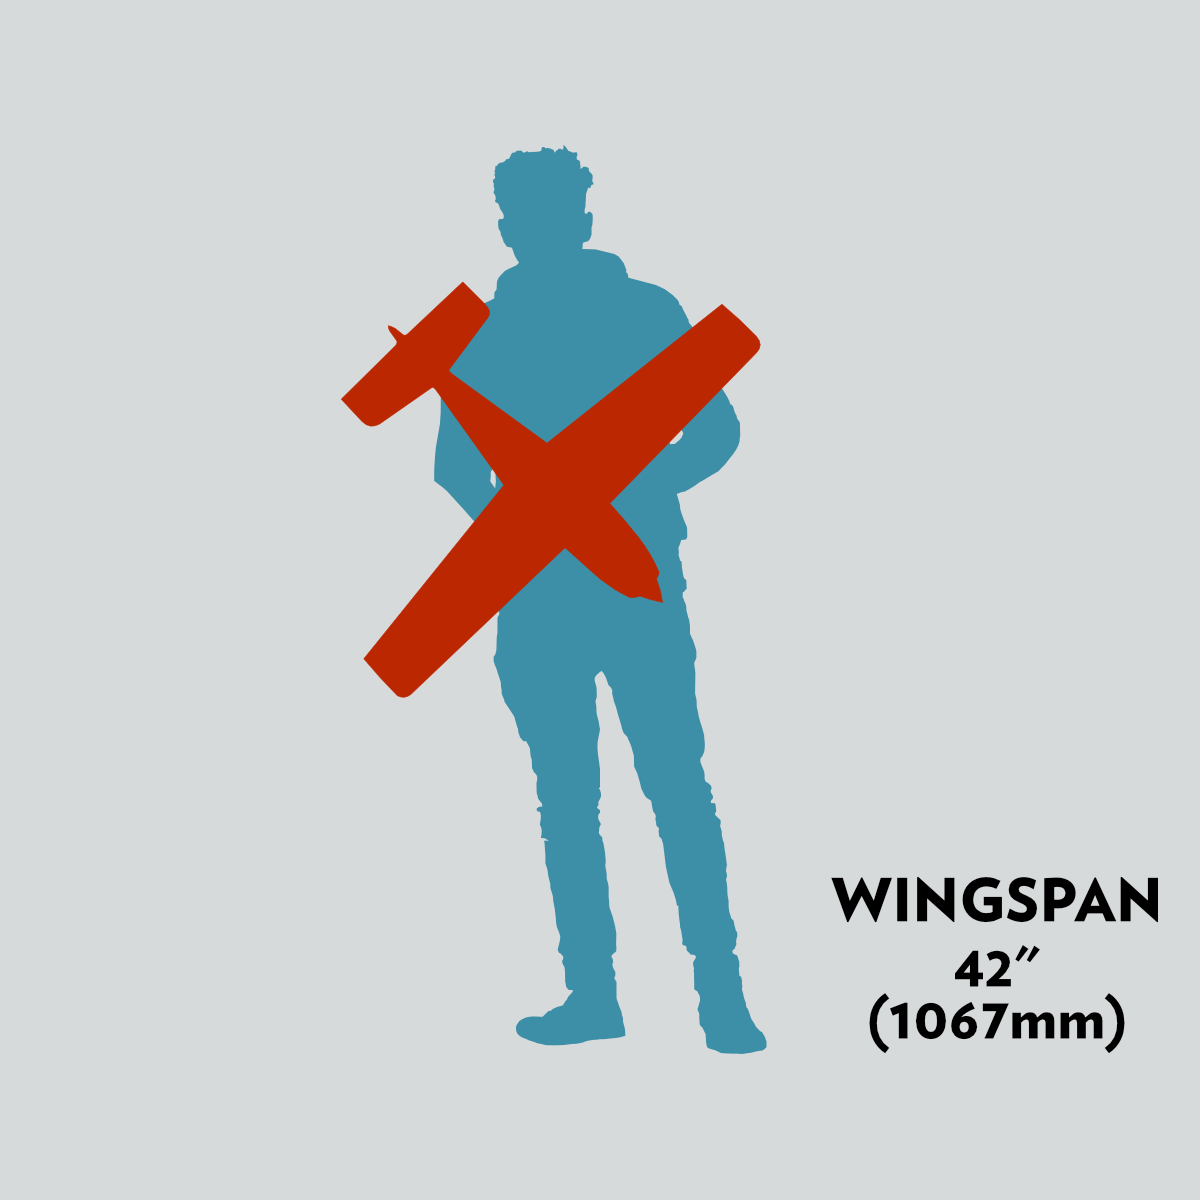 42” (1047mm) Wingspan